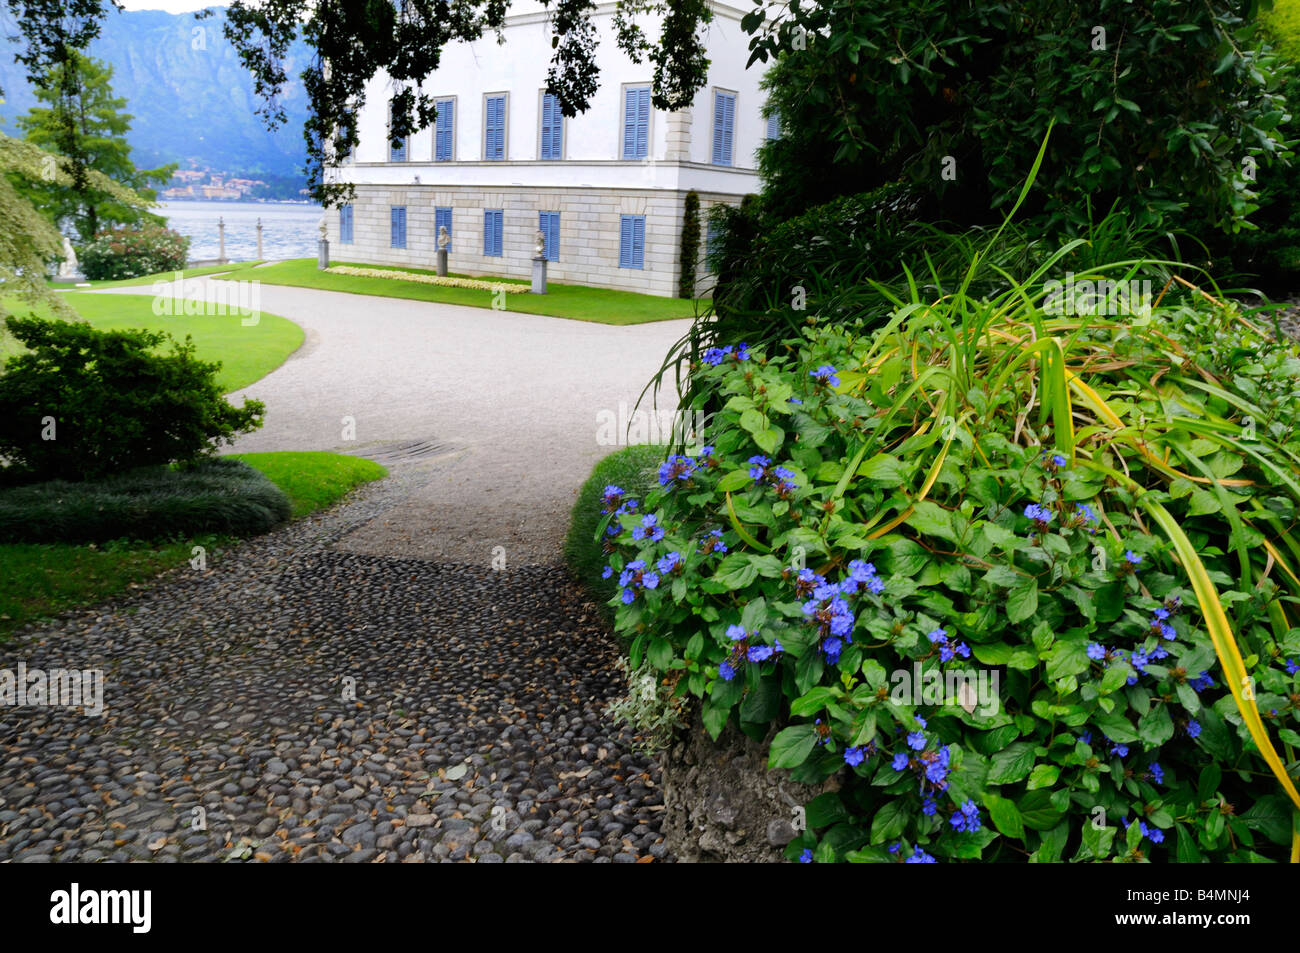 Villa Melzi on Lake Como in Italy Stock Photo